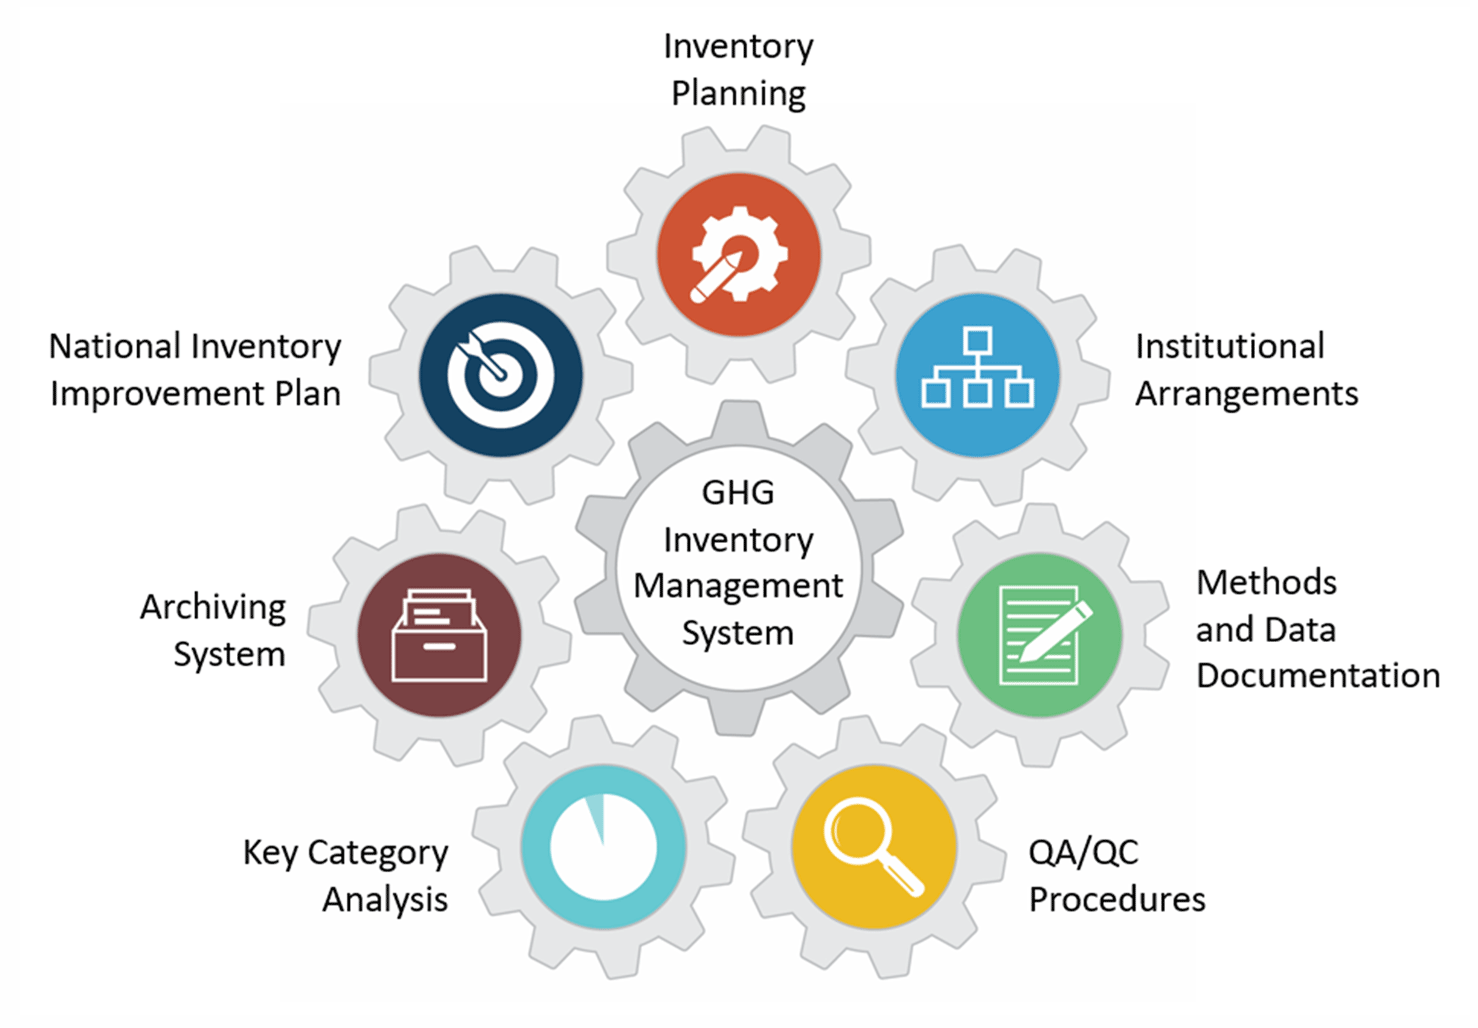 GHG Inventory Management System